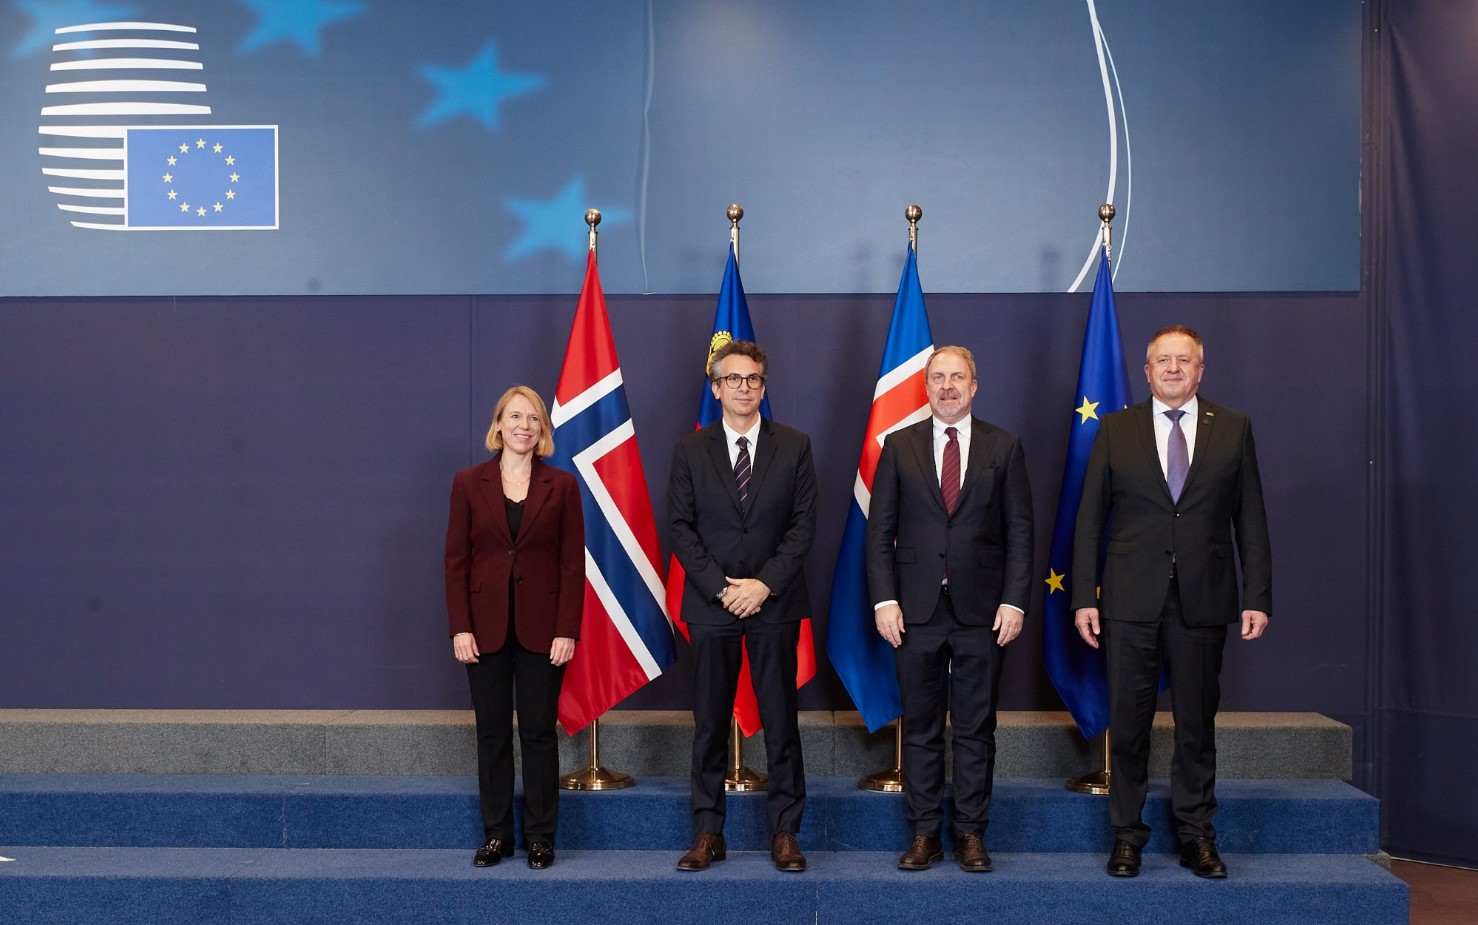 EEA/EFTA countries meet as Hungary blocks final declaration